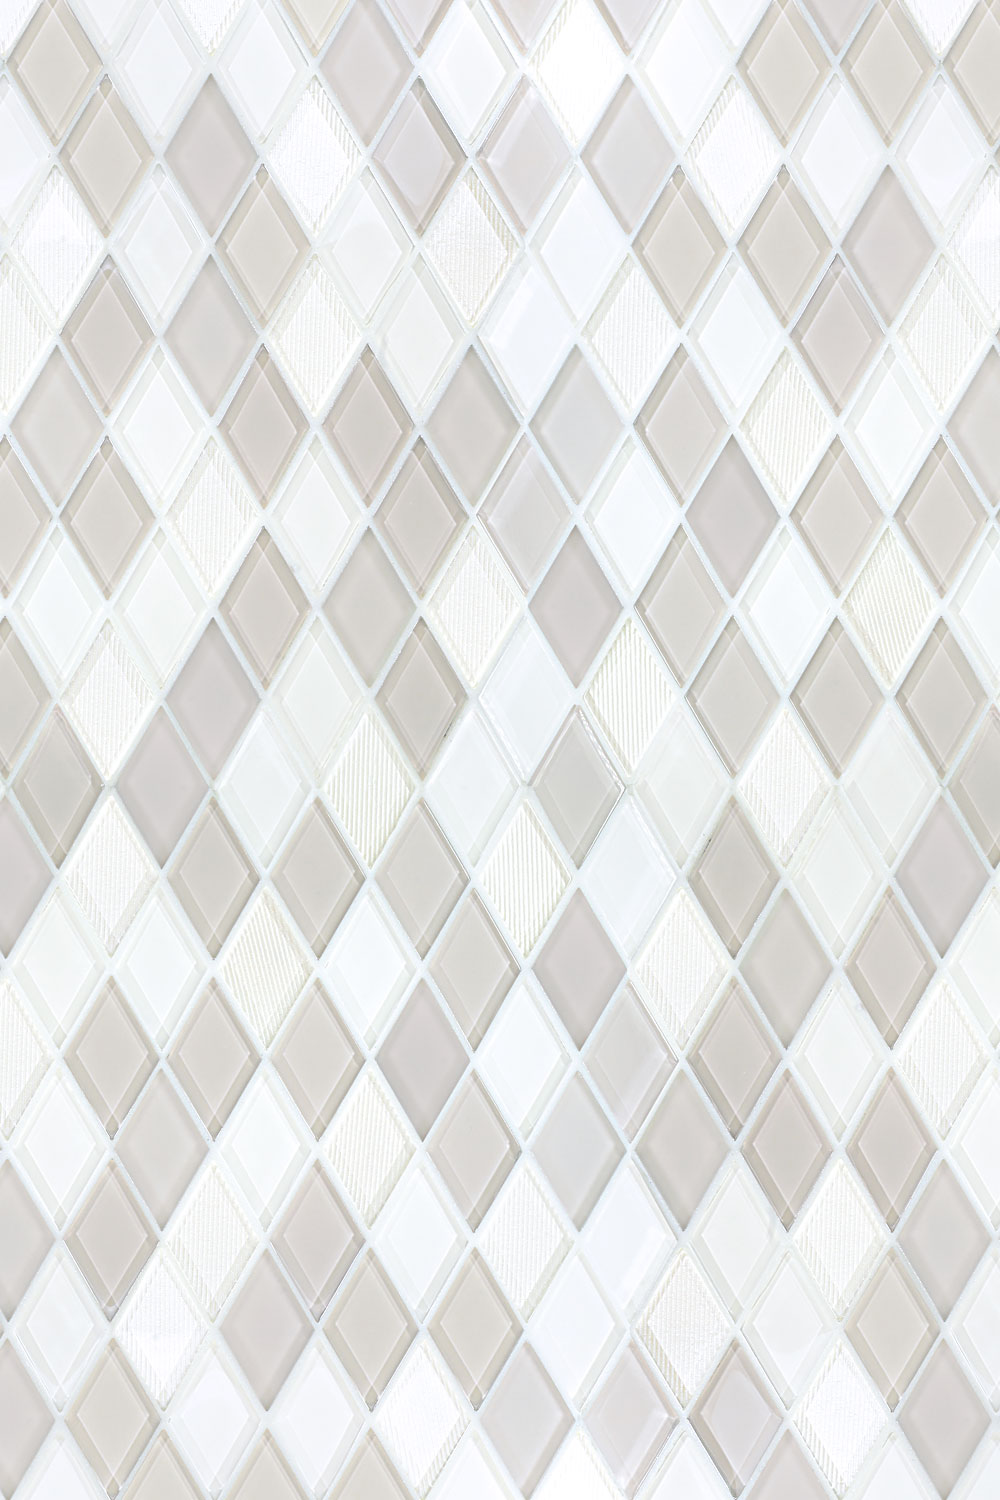 Beige Glass Rhomboid Design Kitchen Backsplash Tile